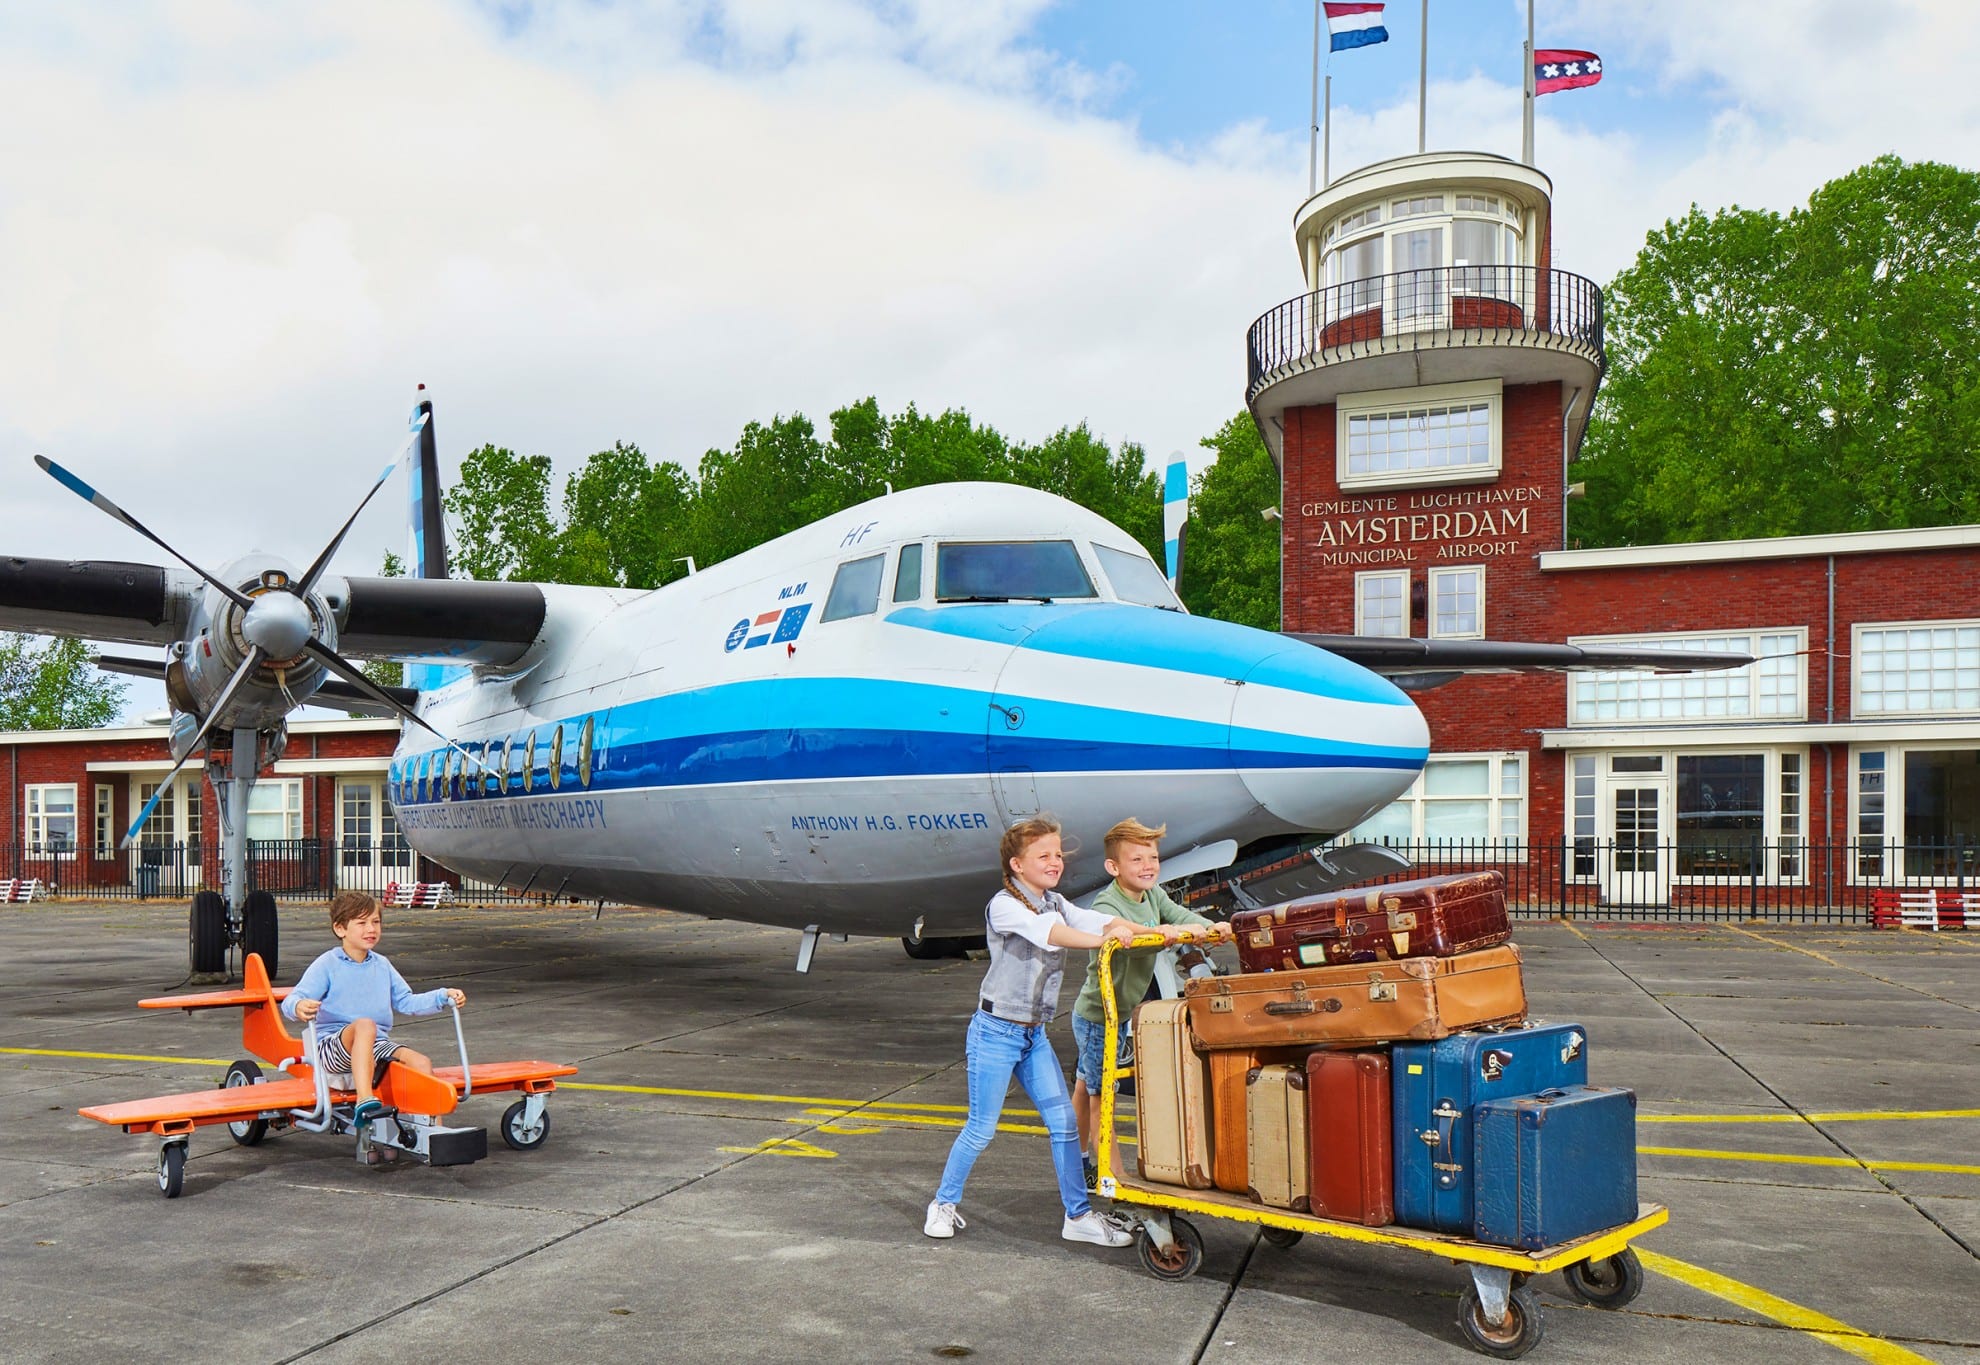 Museum Aviodrome in Lelystad